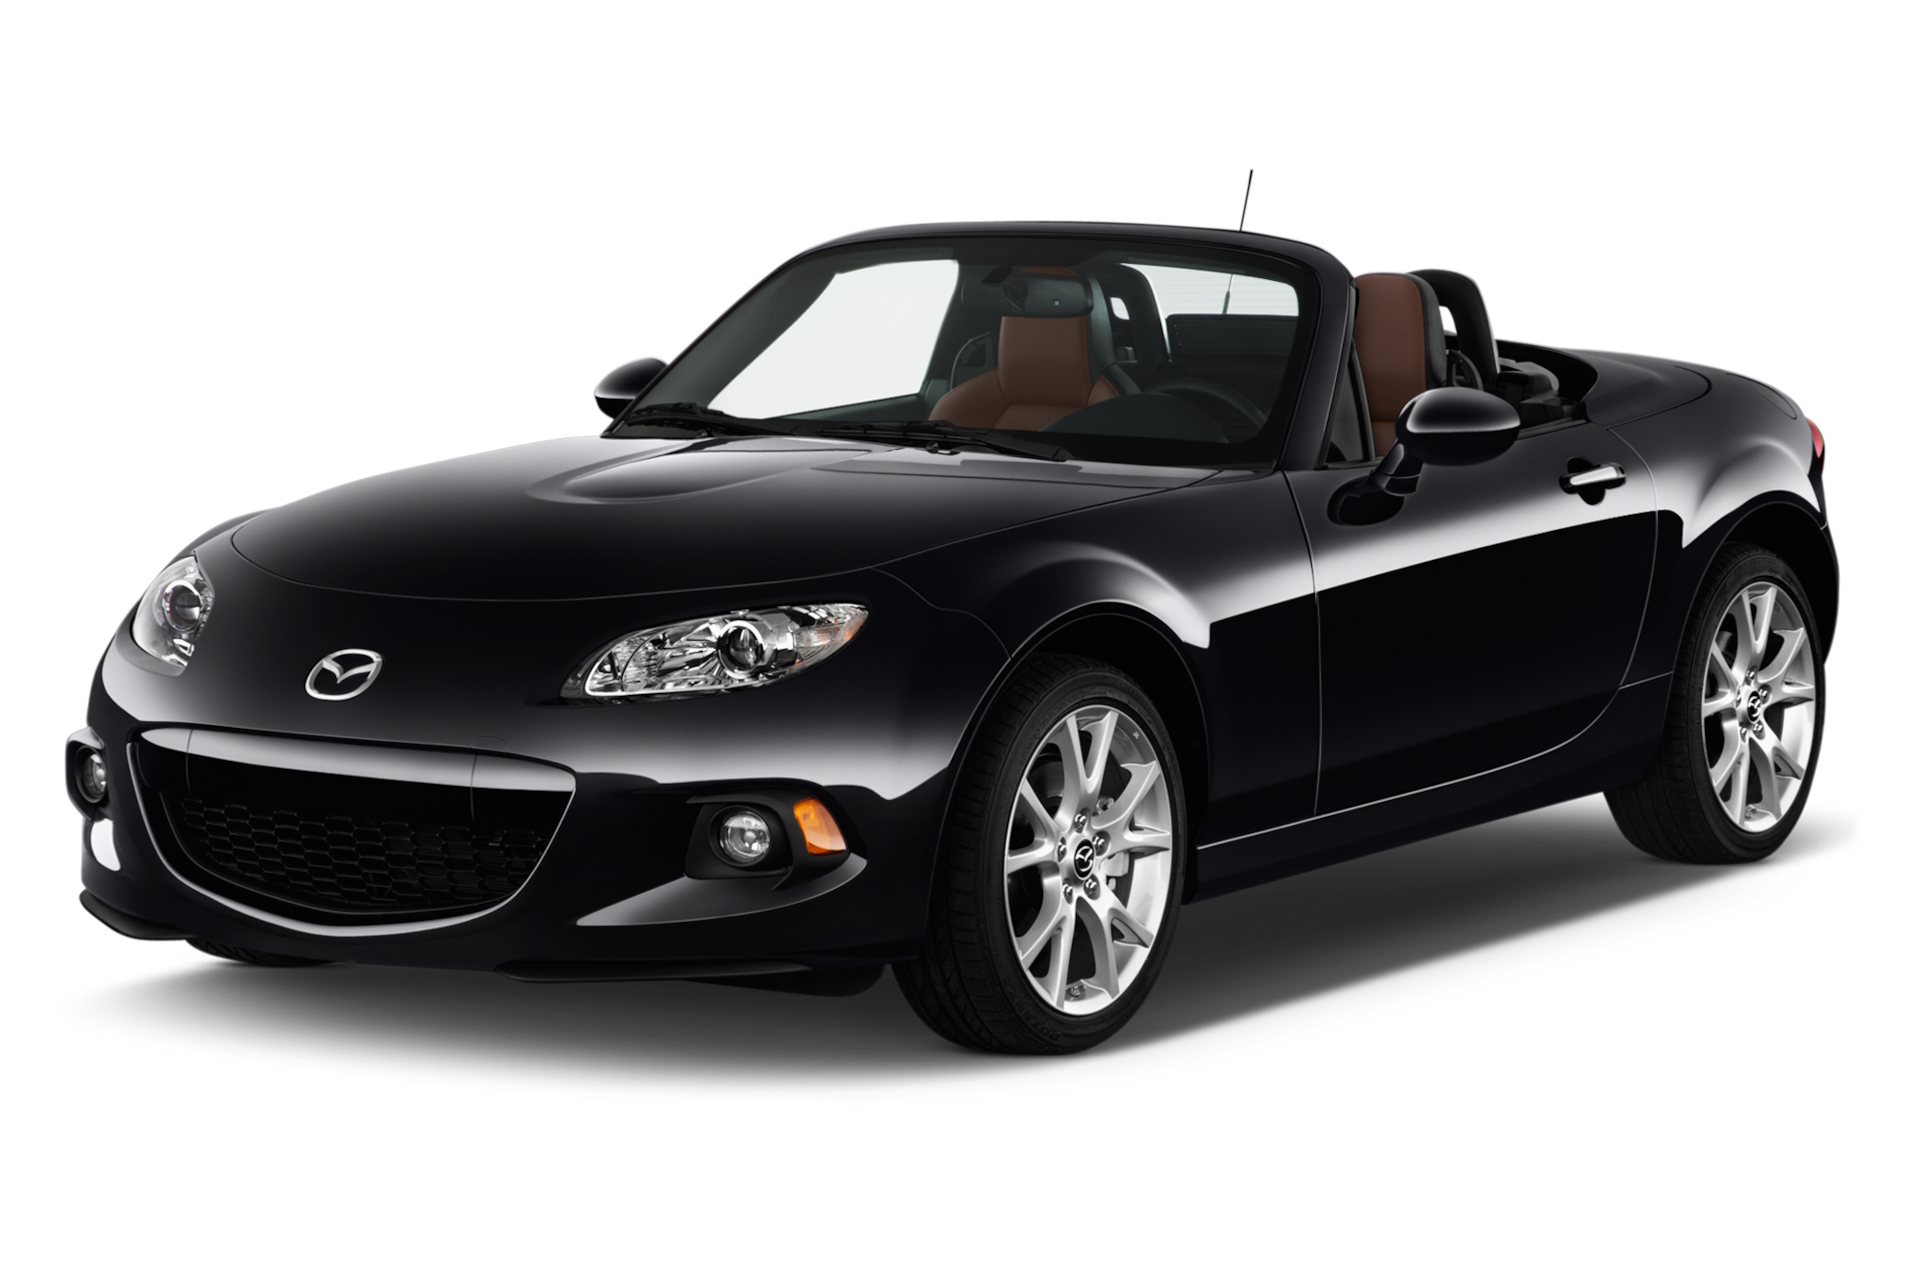 2013 Mazda Miata Prices, Reviews, and Photos - MotorTrend